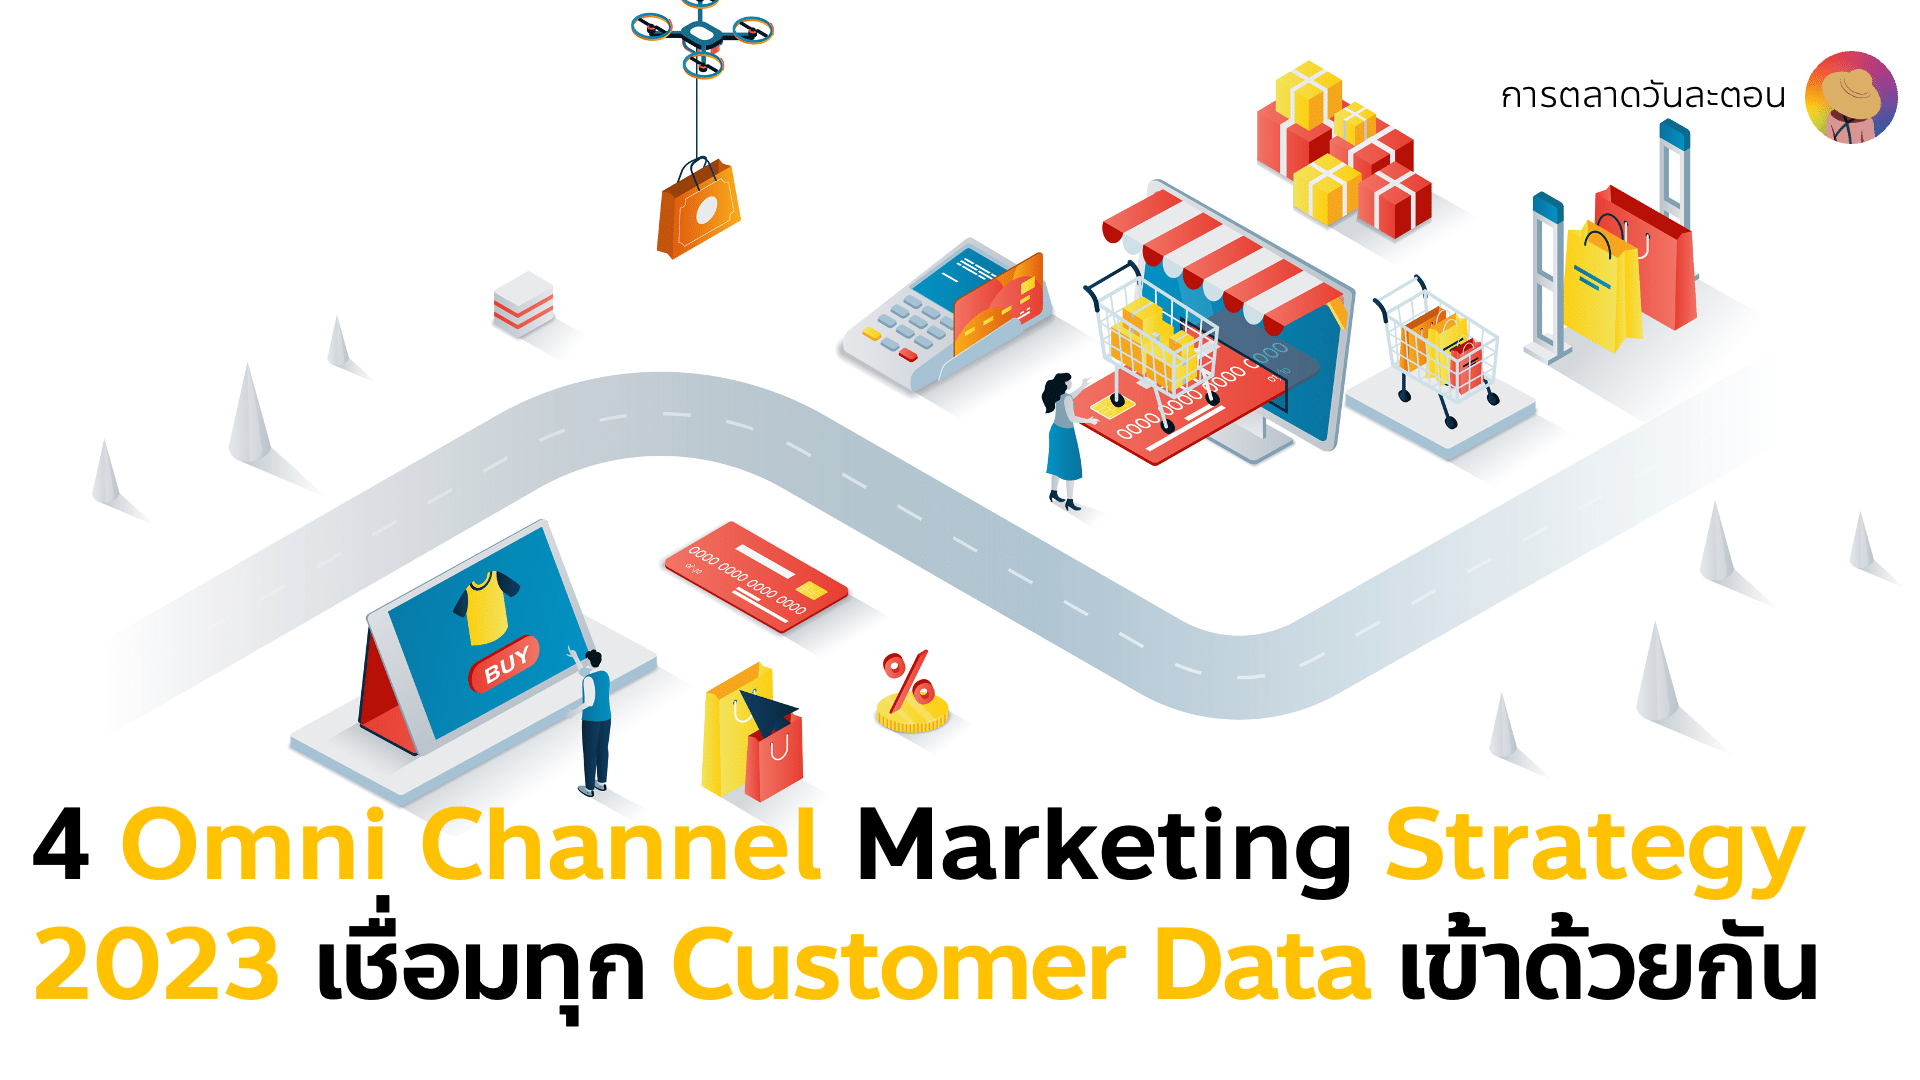 4 Omni Channel Marketing Strategy and Seamless Customer Experience 2023 เพราะลูกค้ายุค Digital ไม่เคยคาดหวังน้อยลงจากแบรนด์